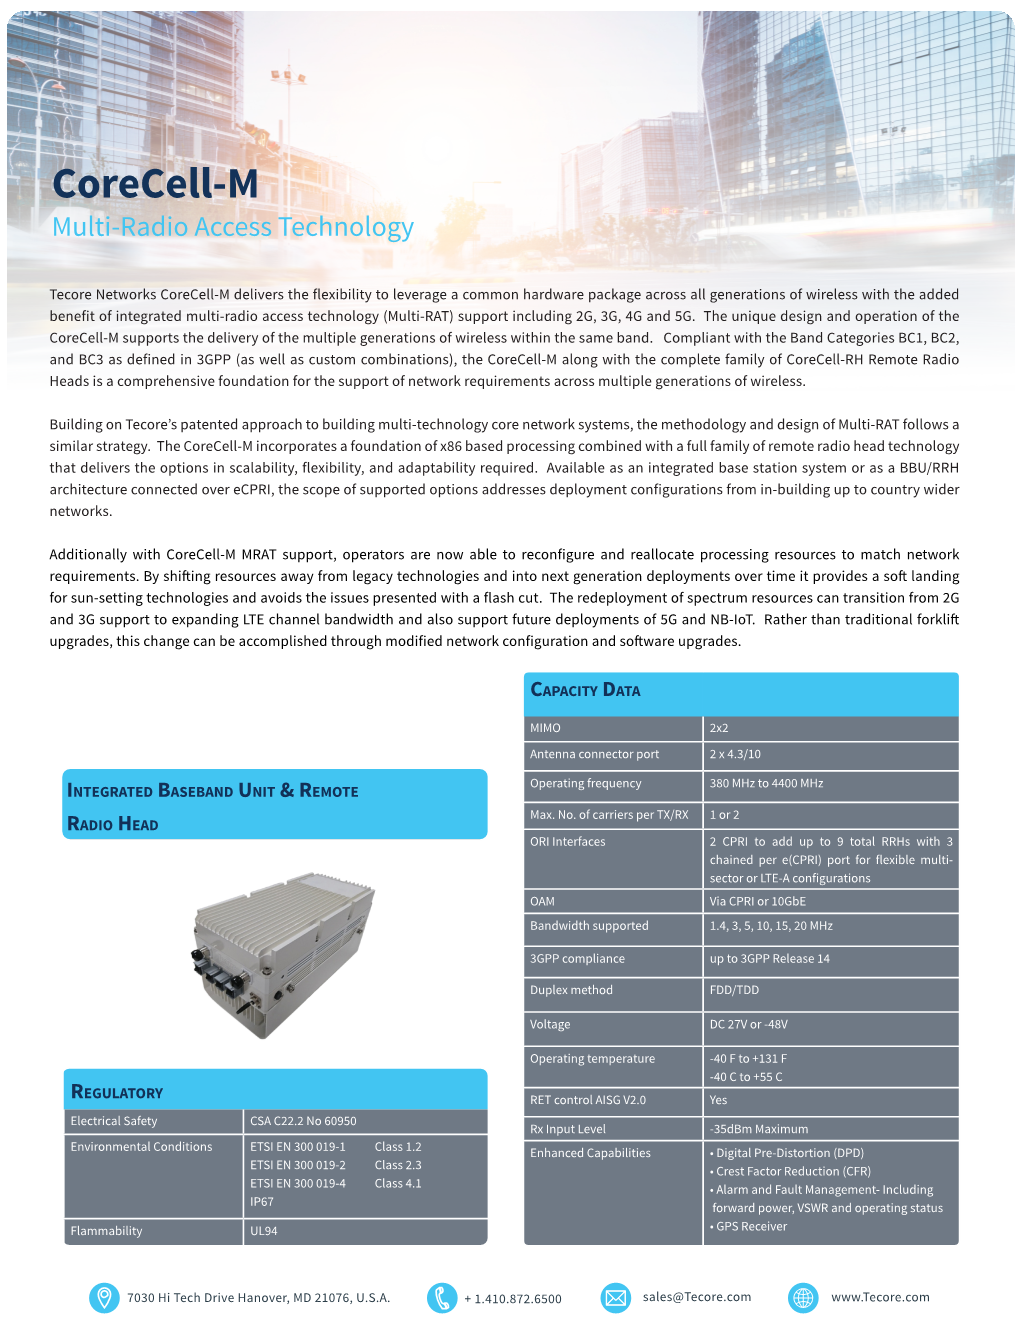 Corecell-M Multi-Radio Access Technology